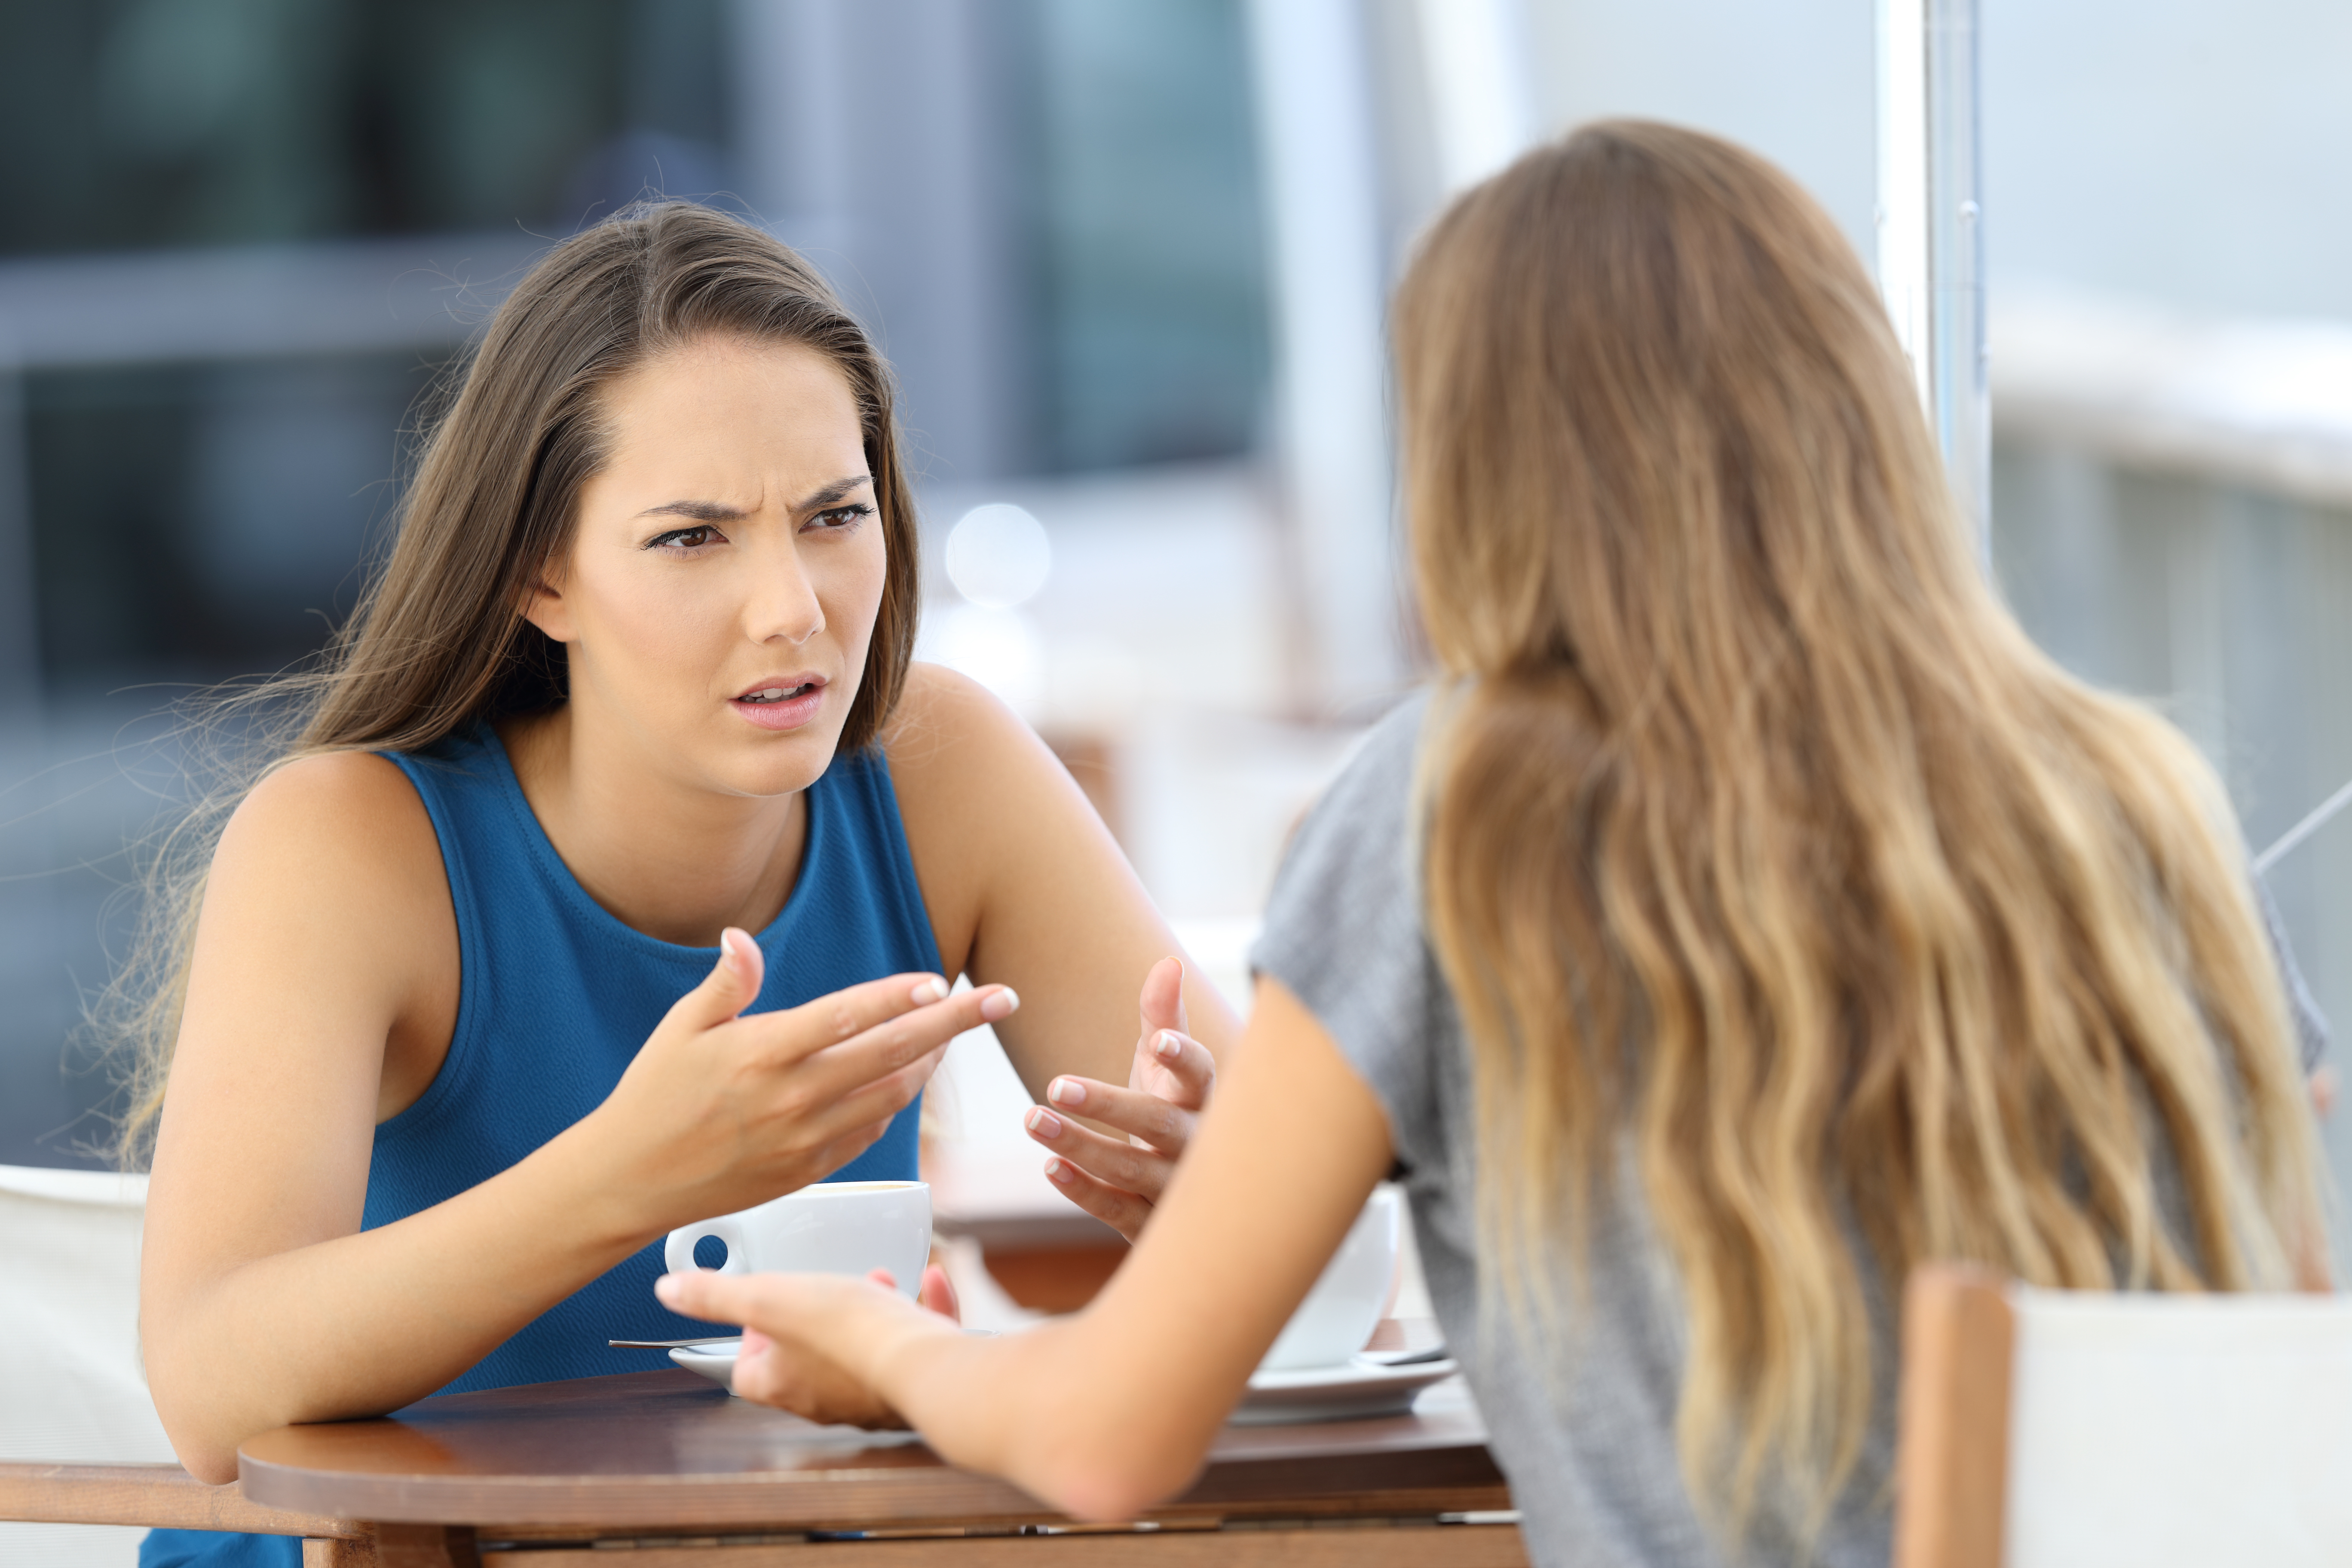 Two women having an argument | Source: Shutterstock